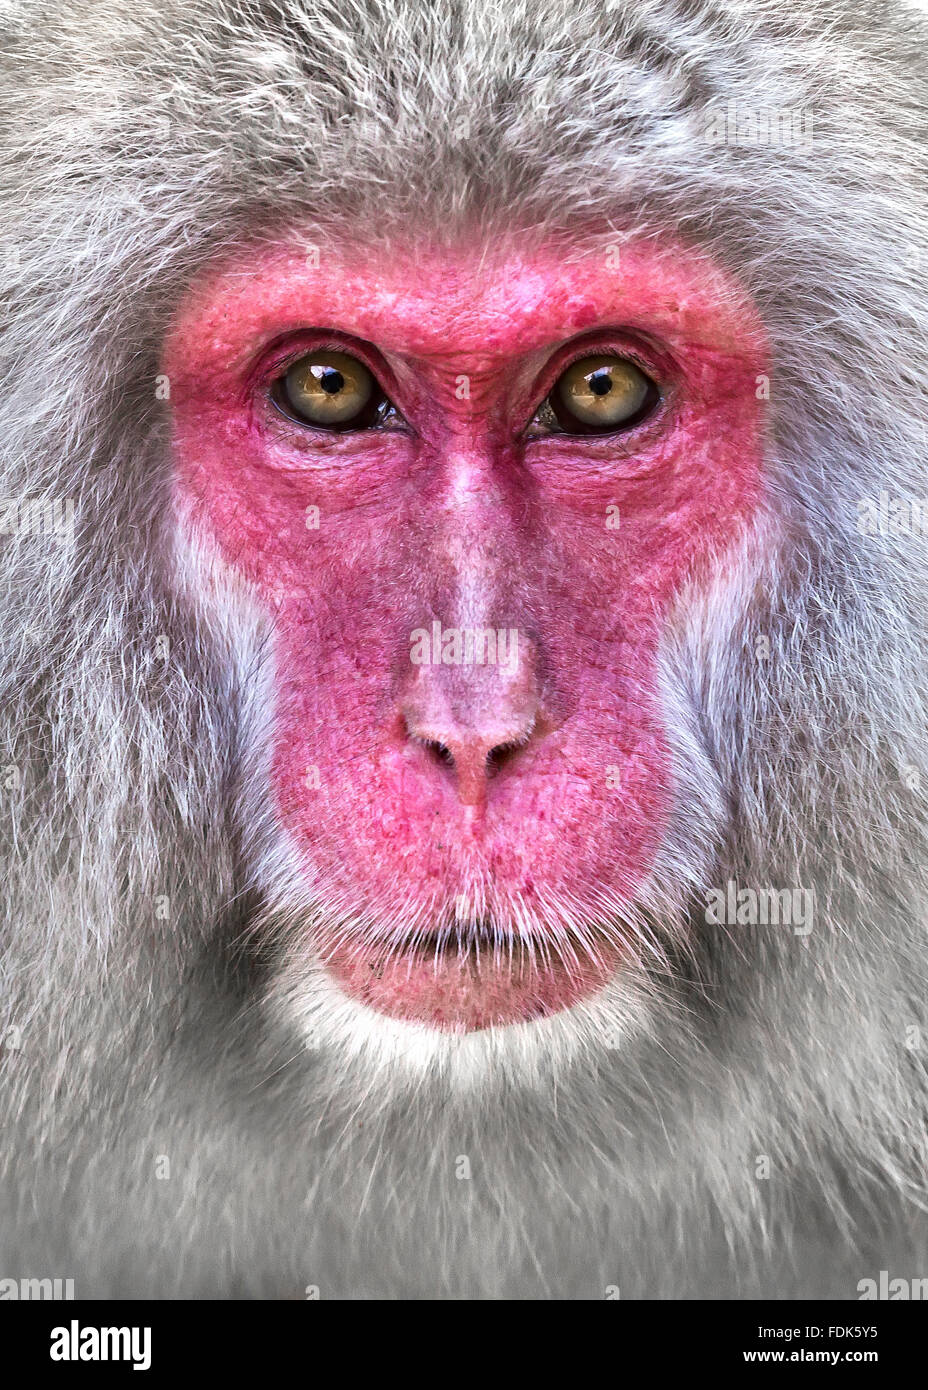 Close-up portrait of a snow monkey, Nagano, Honshu, Japan Stock Photo